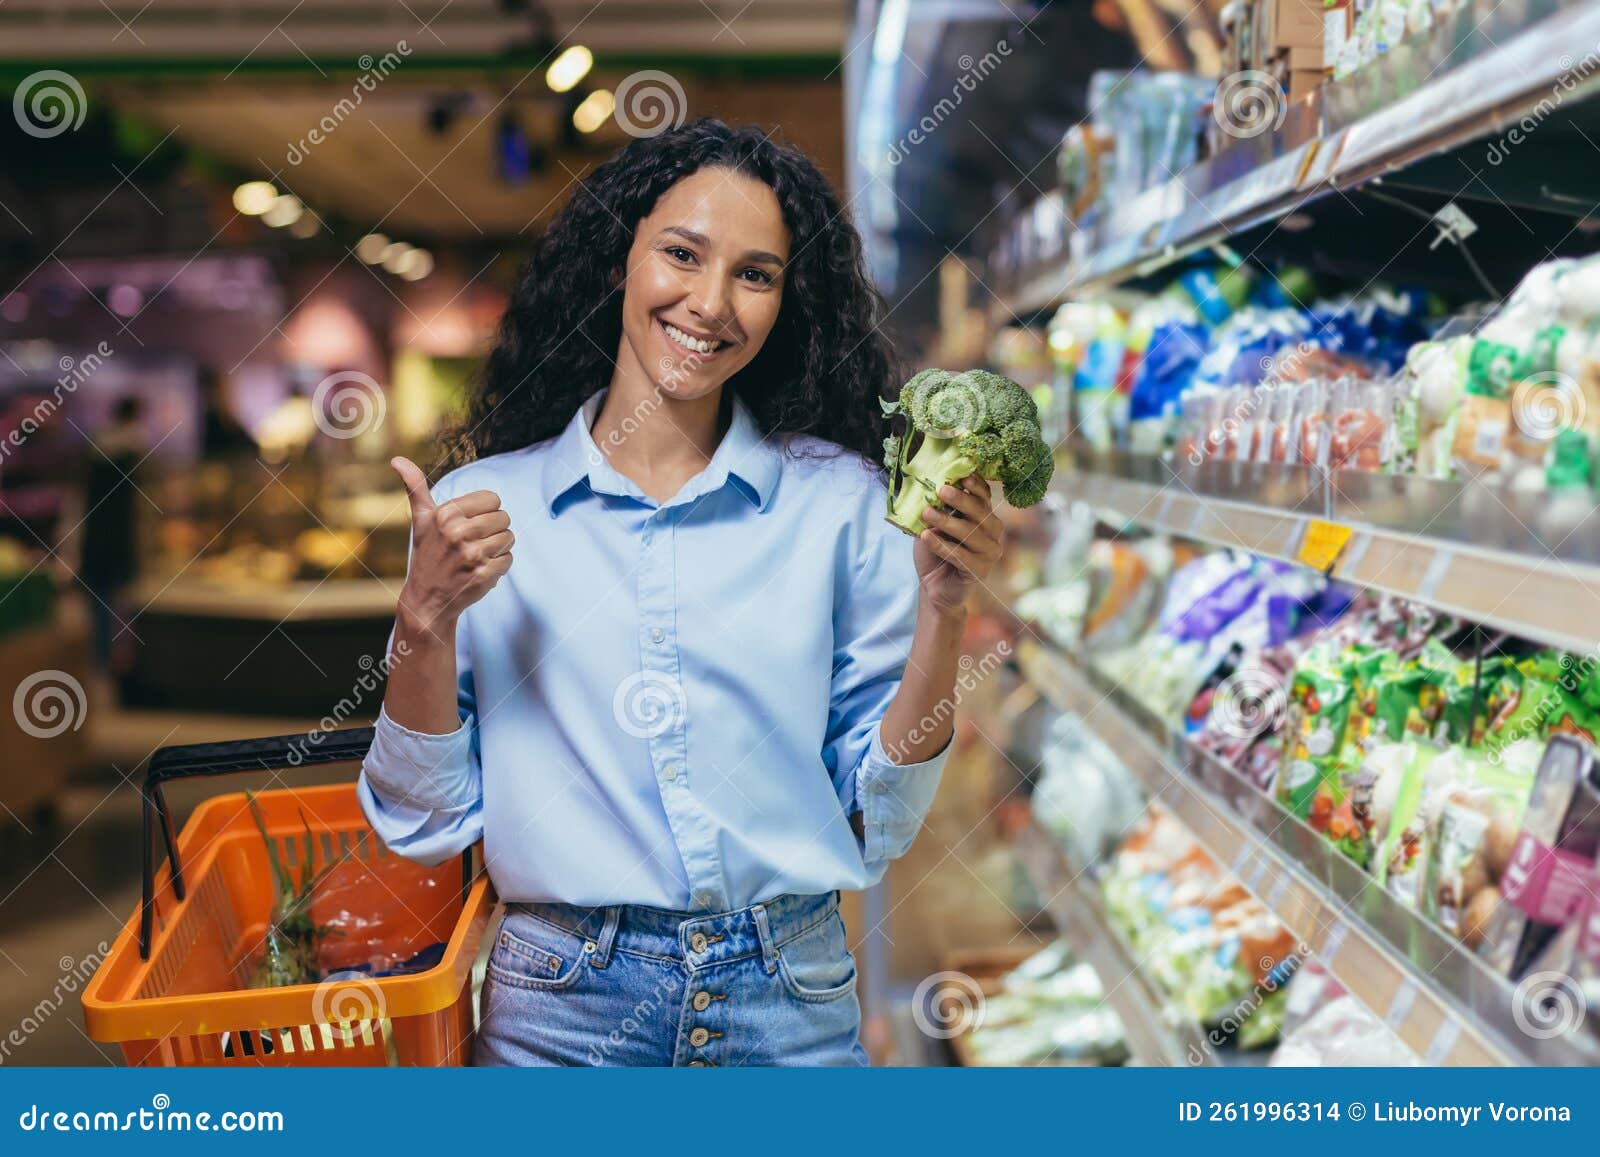 Portrait of a Beautiful Vegetarian Woman in a Supermarket, a Hispanic ...